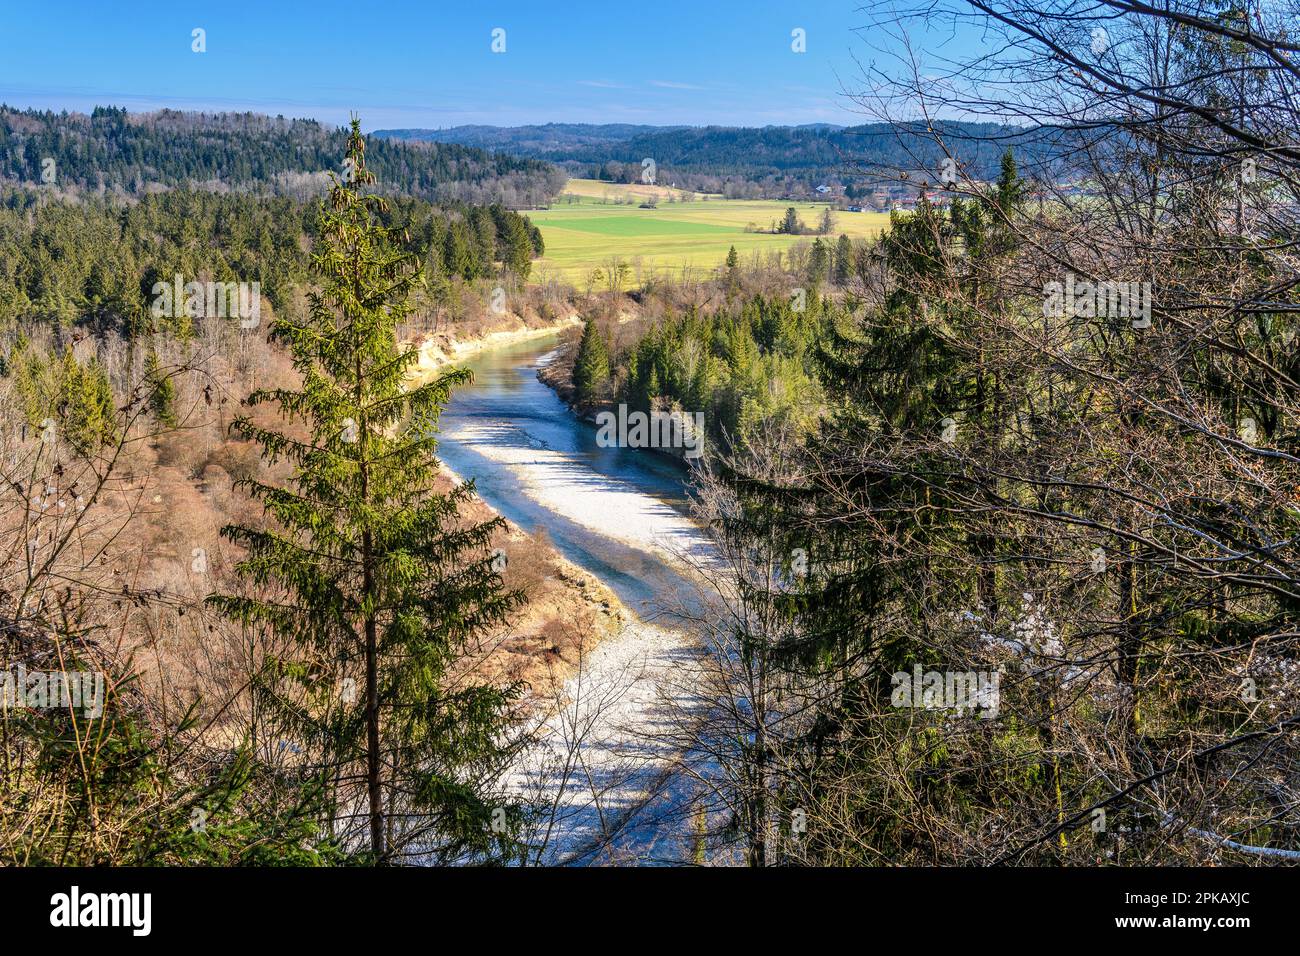 Germany, Bavaria, Tölzer Land, Königsdorf, Isar valley, view from painter angle Stock Photo